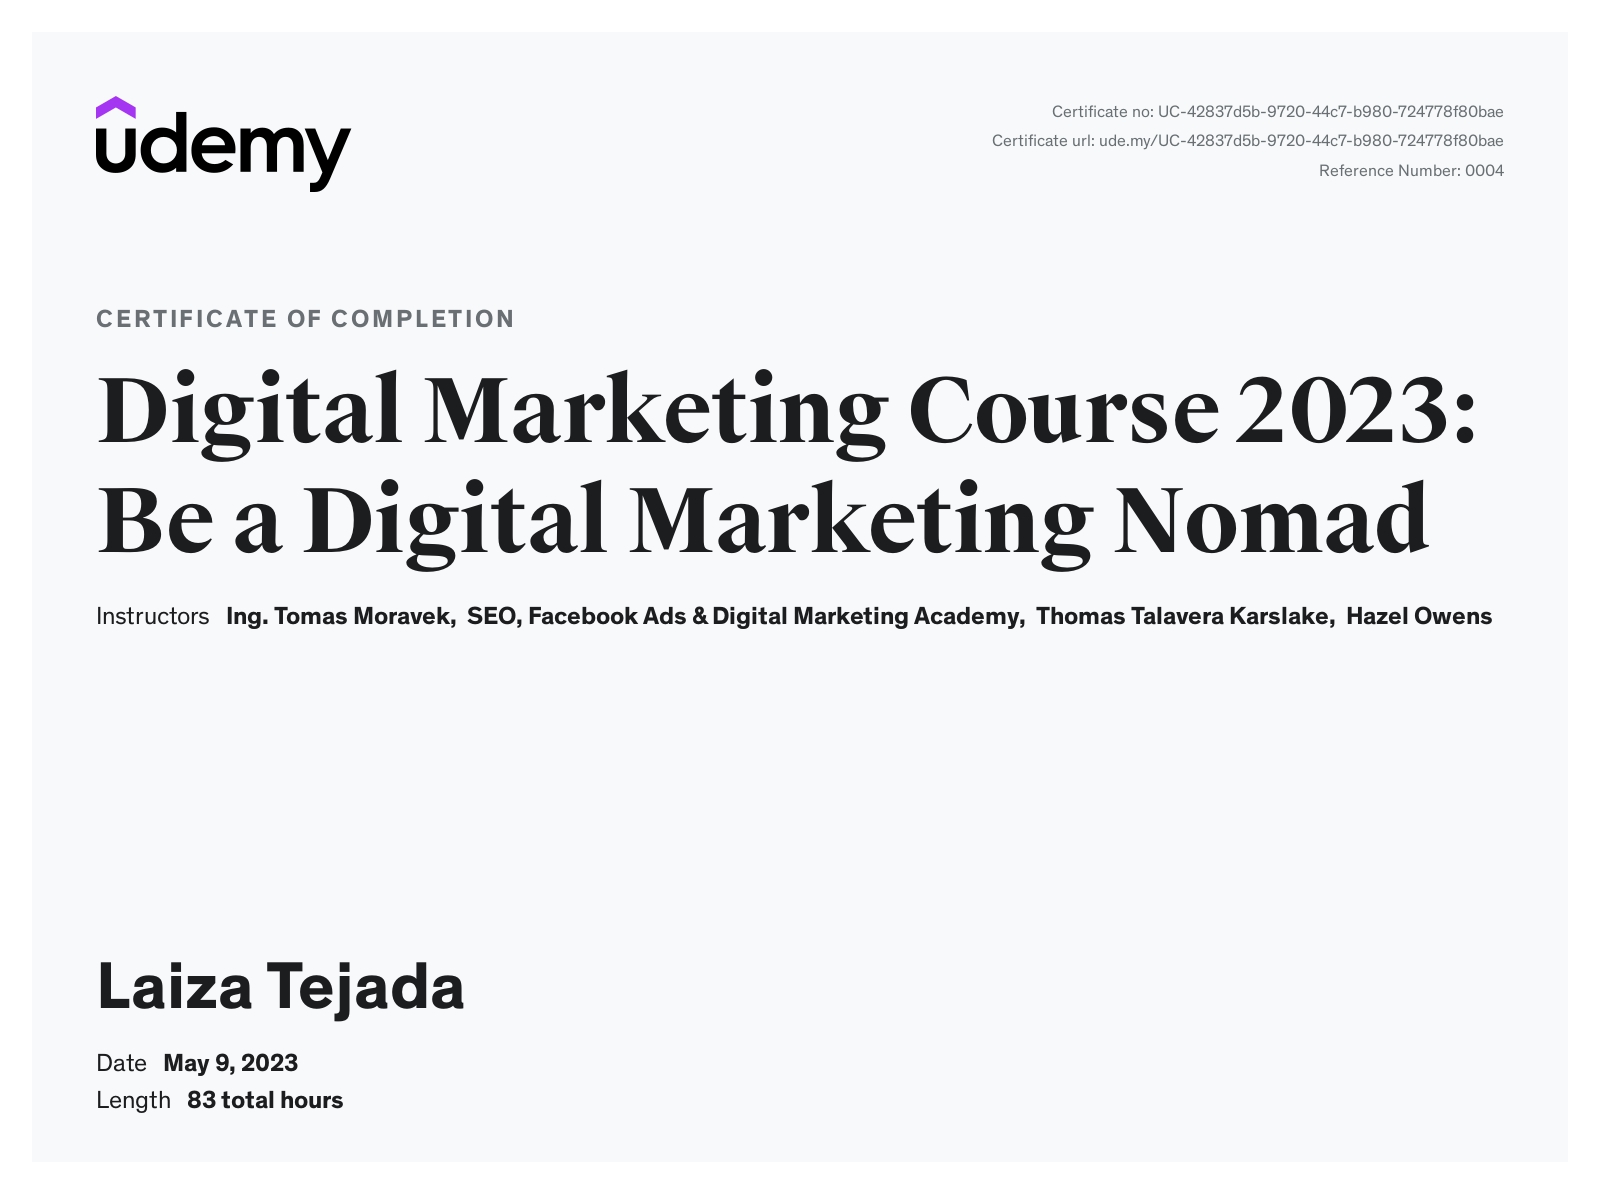 Best Digital Marketing Course 2023: Be a Digital Marketing Nomad